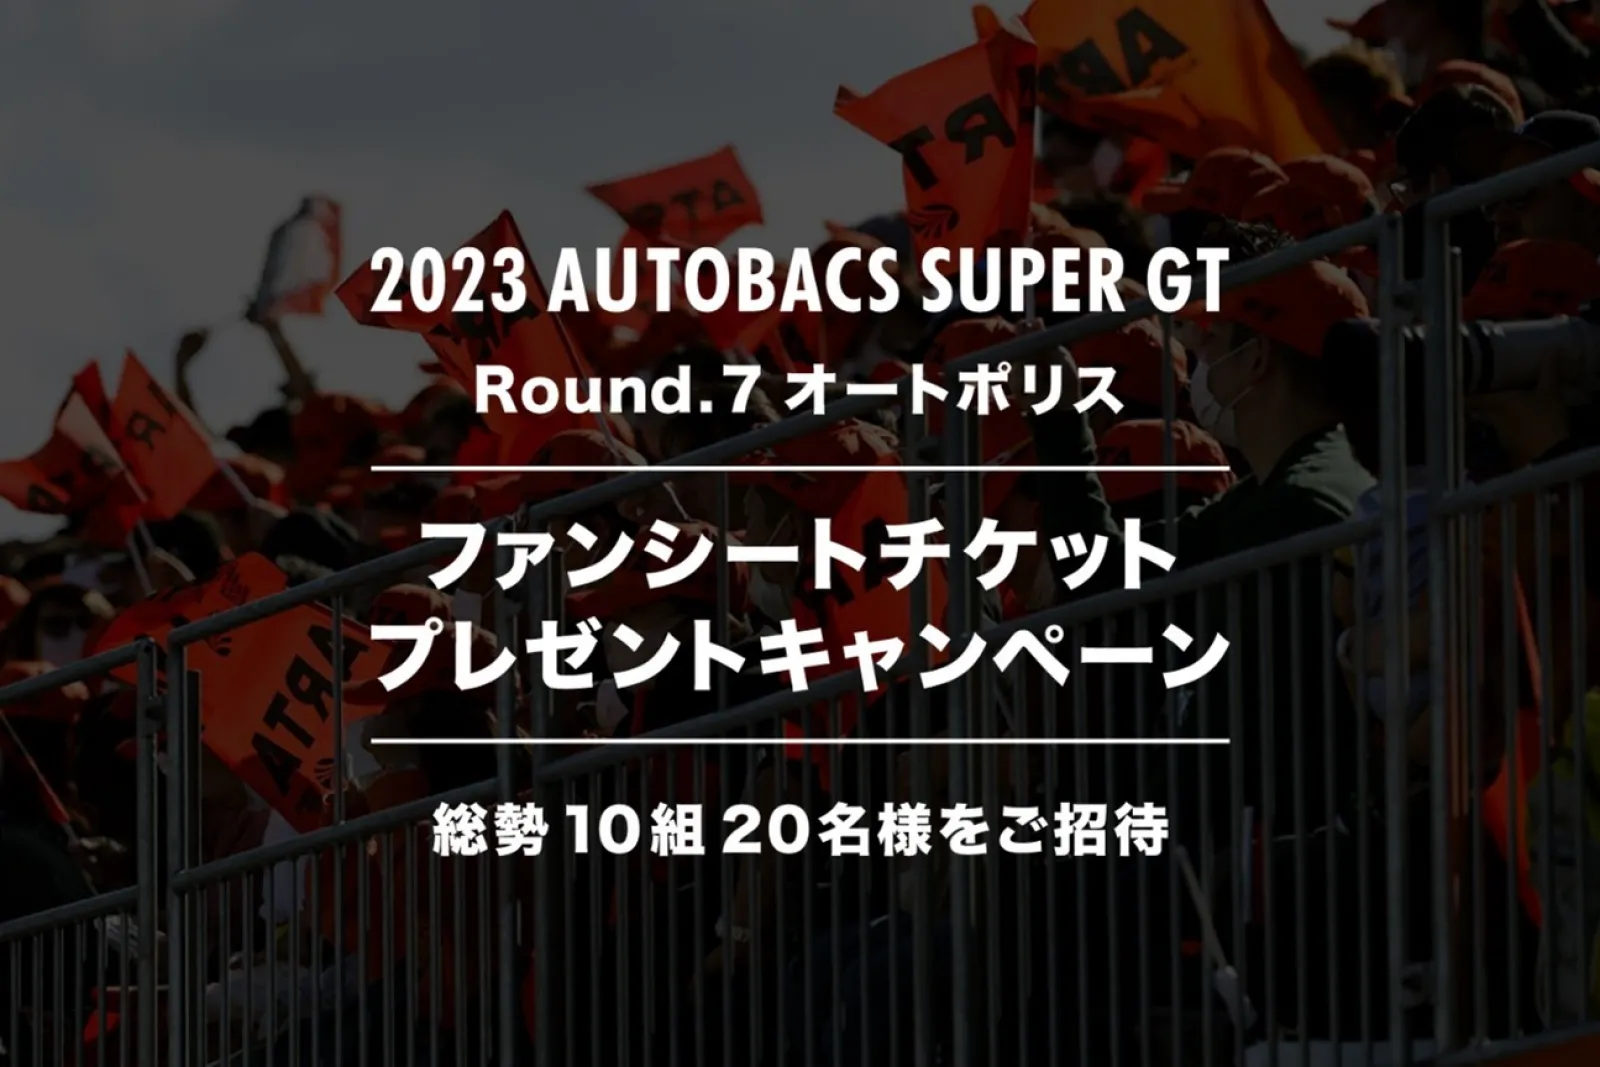 2023 AUTOBACS SUPER GT Round.7 (オートポリス) ファンシートチケット